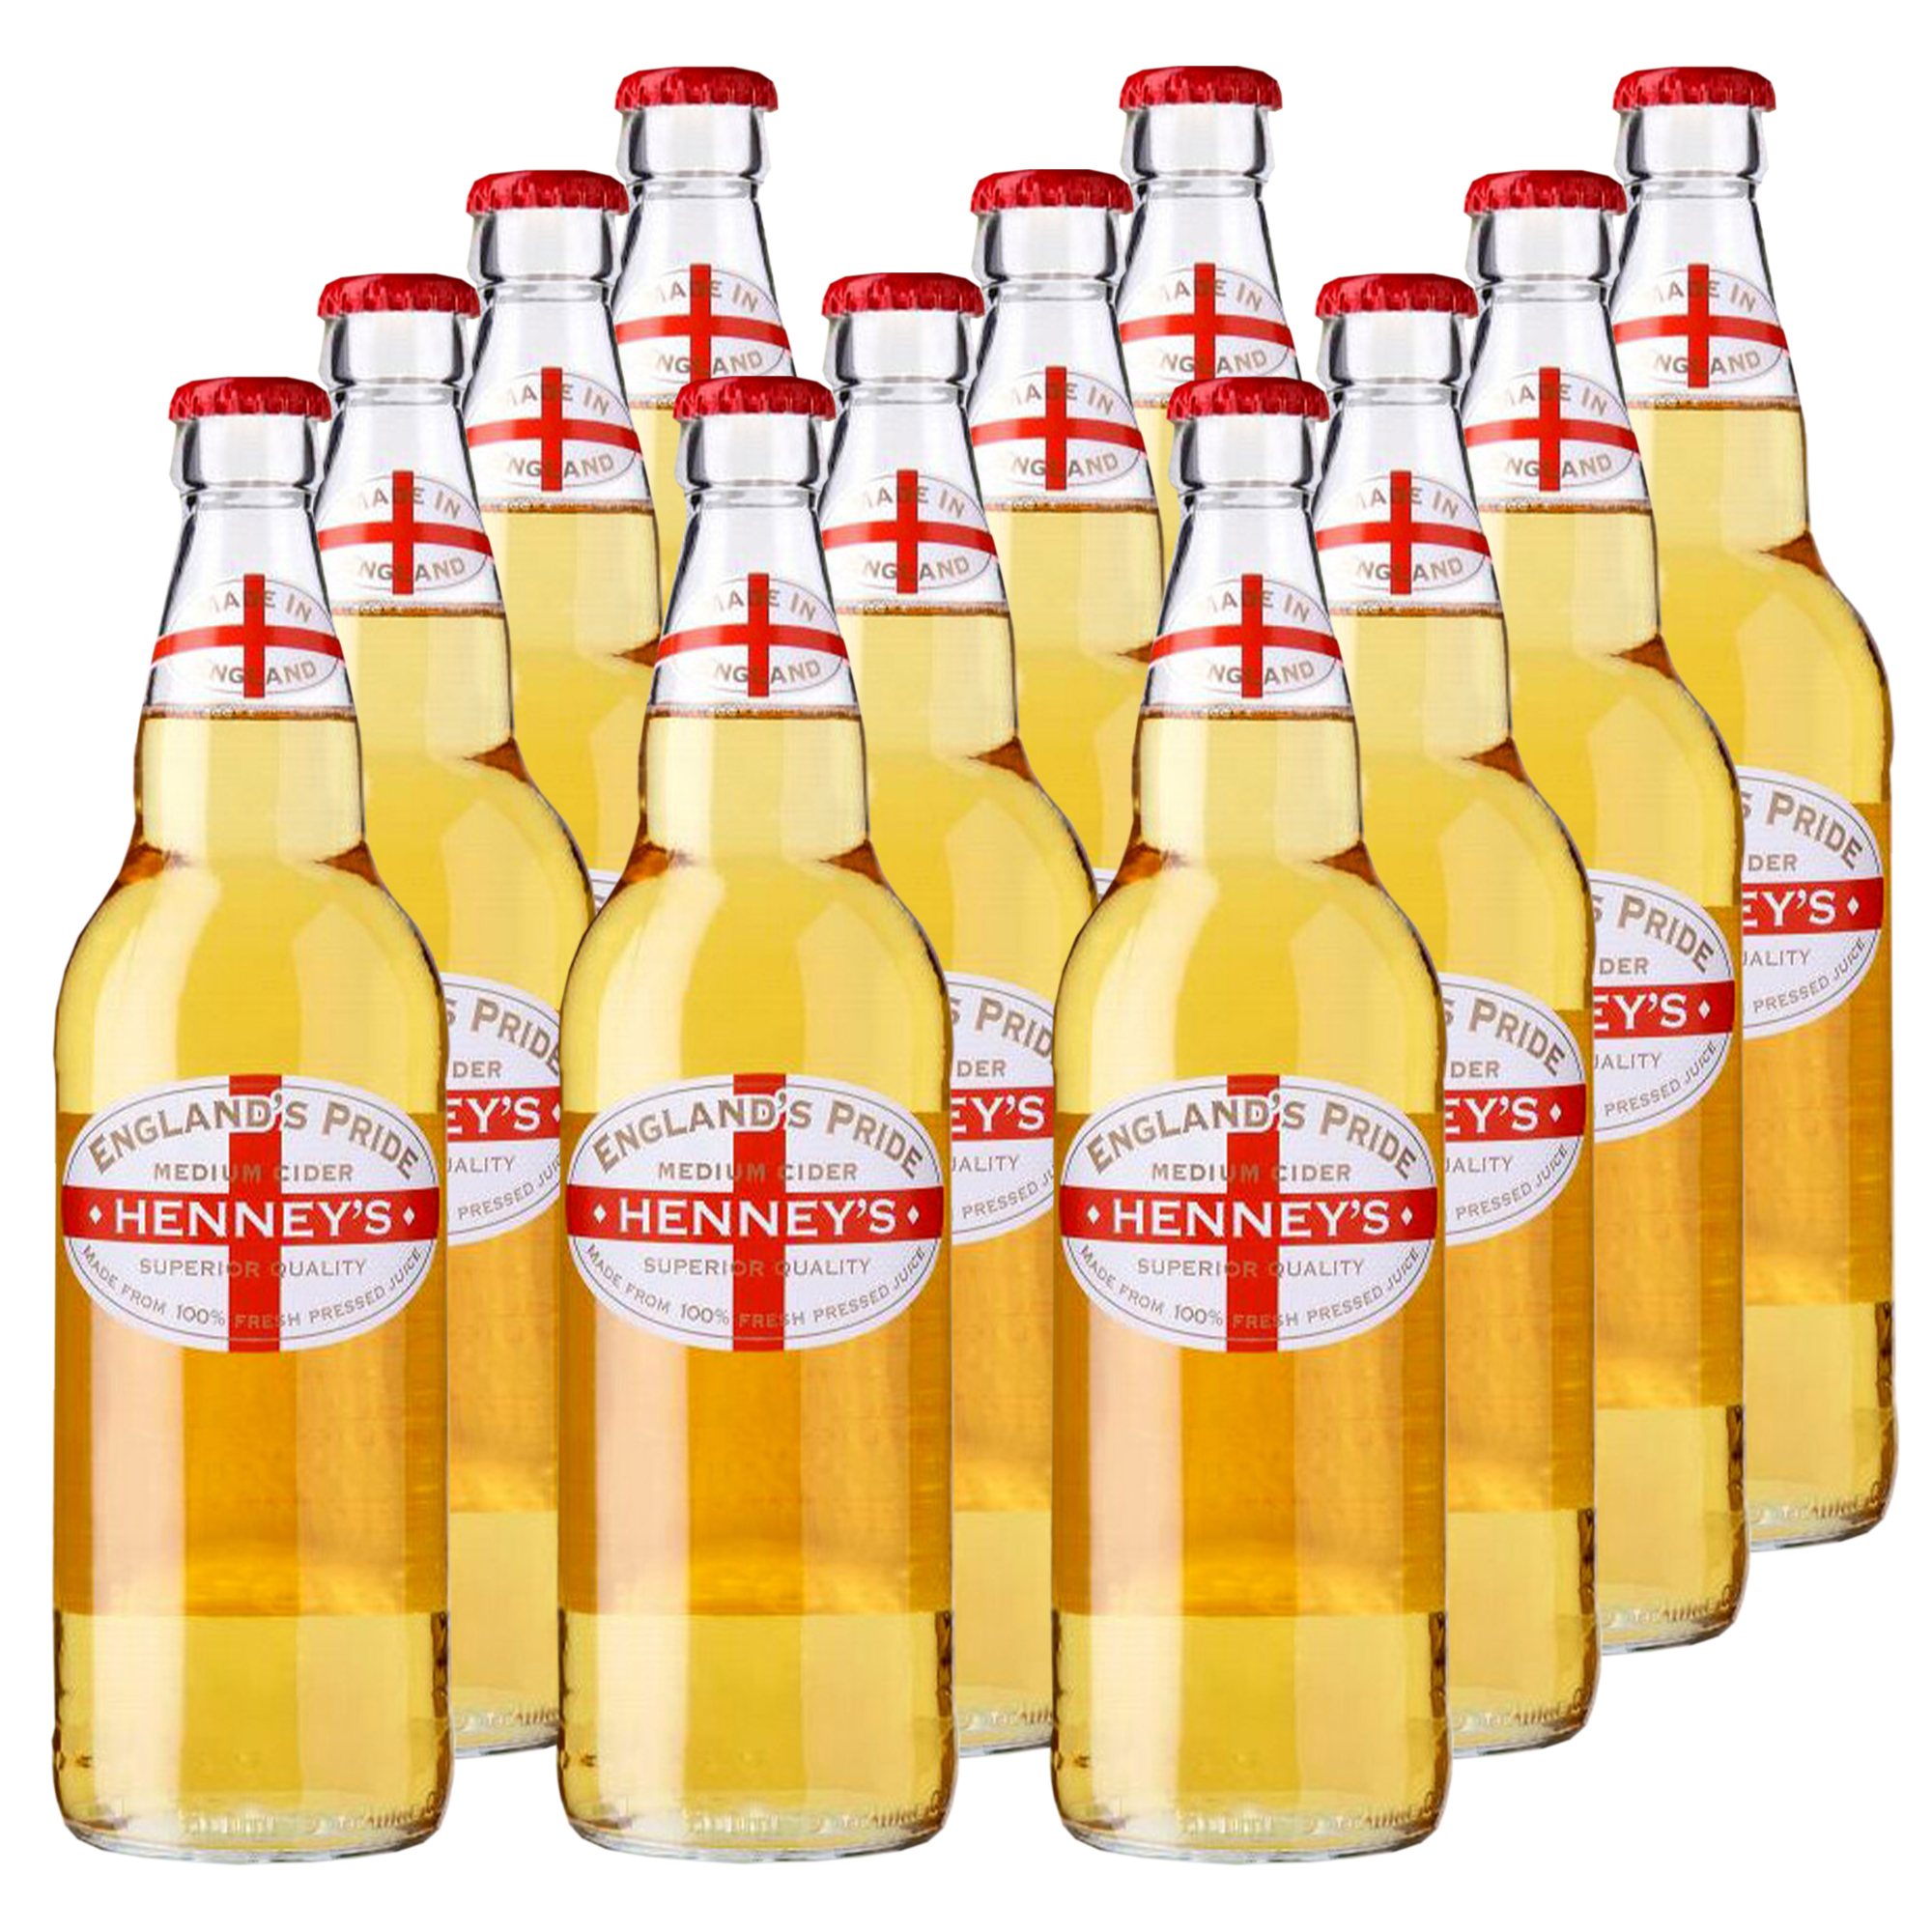 Henney's England's Pride Medium Cider 12x500ml